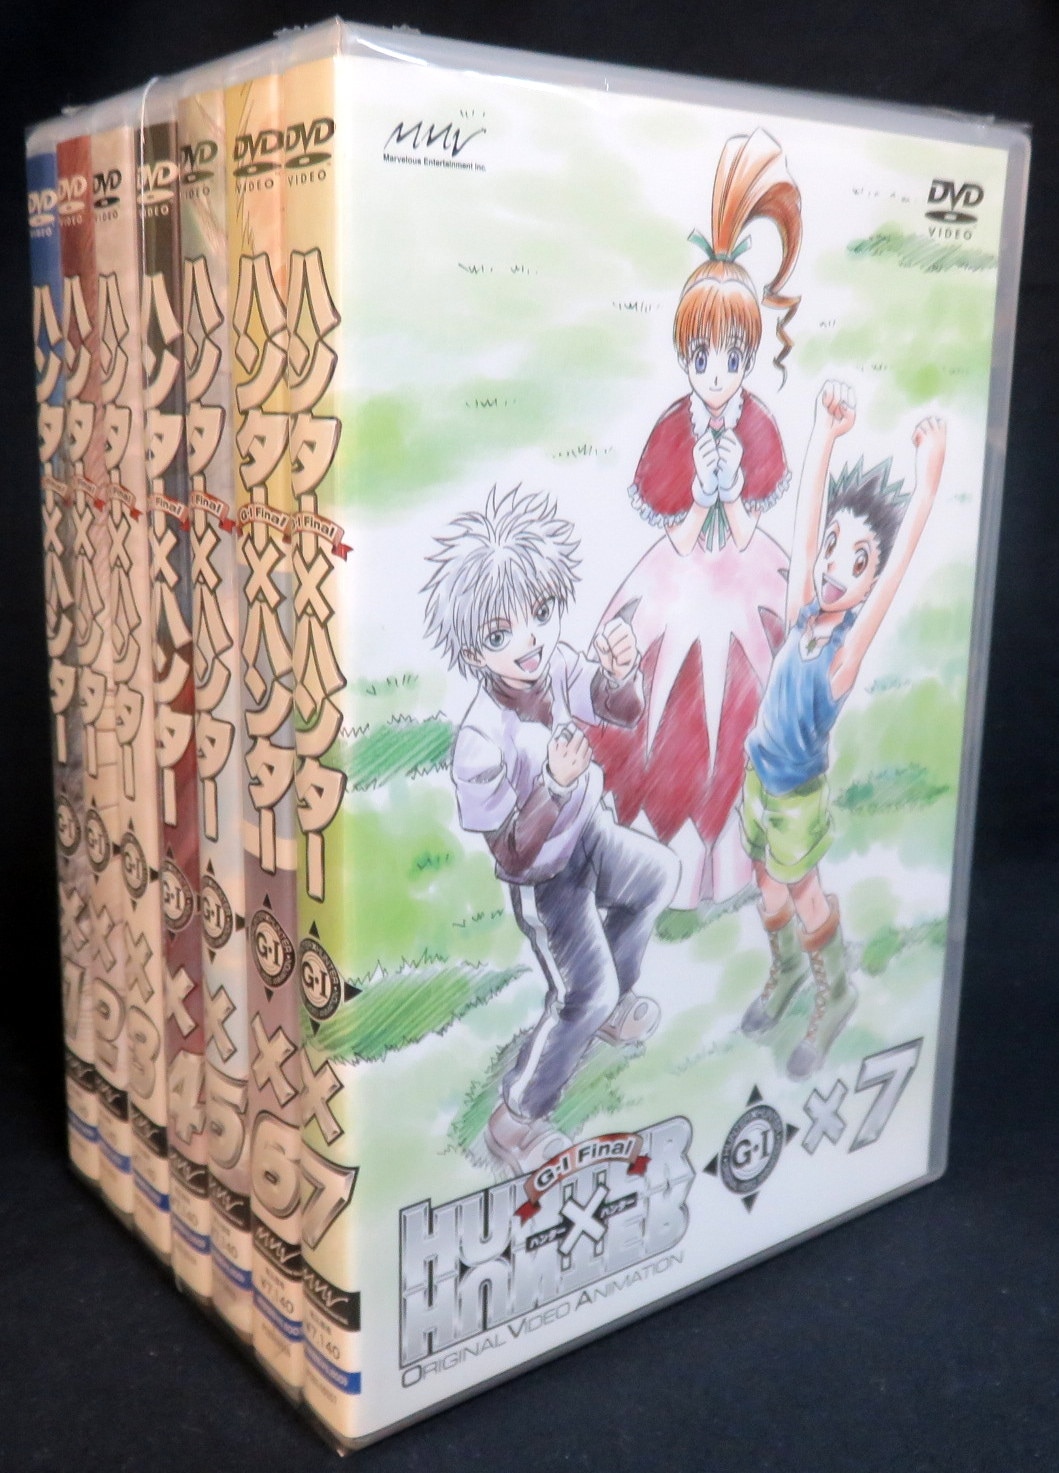 Anime Dvd Hunter X Hunter Ova G I Final Complete 7 Volume Set Mandarake Online Shop